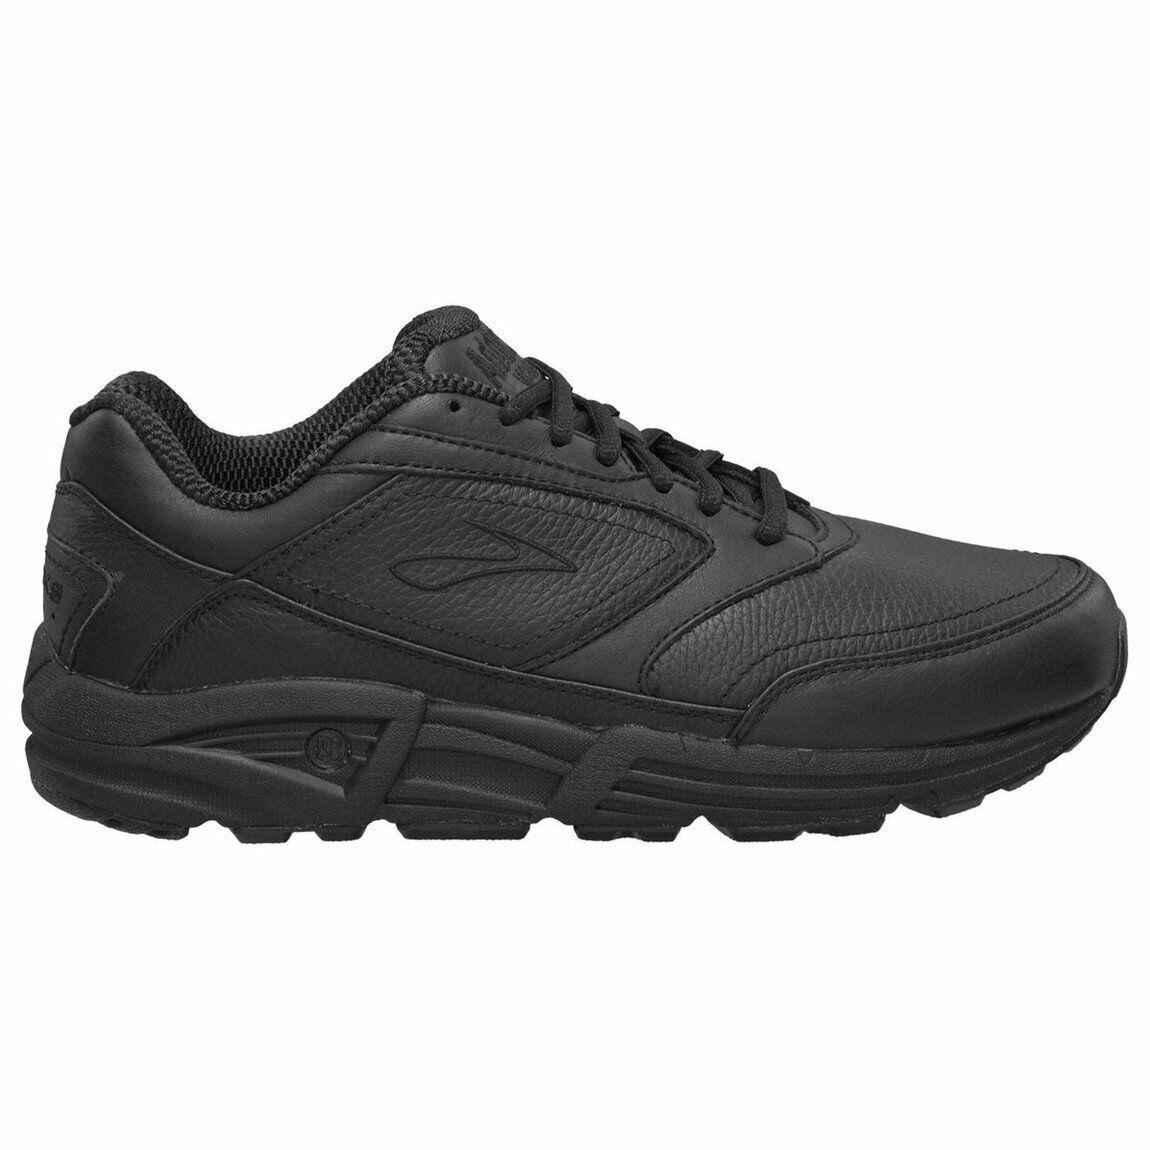 Brooks Addiction Walker 1100391B001 Black Leather Walking Shoes Men`s Size 9 B